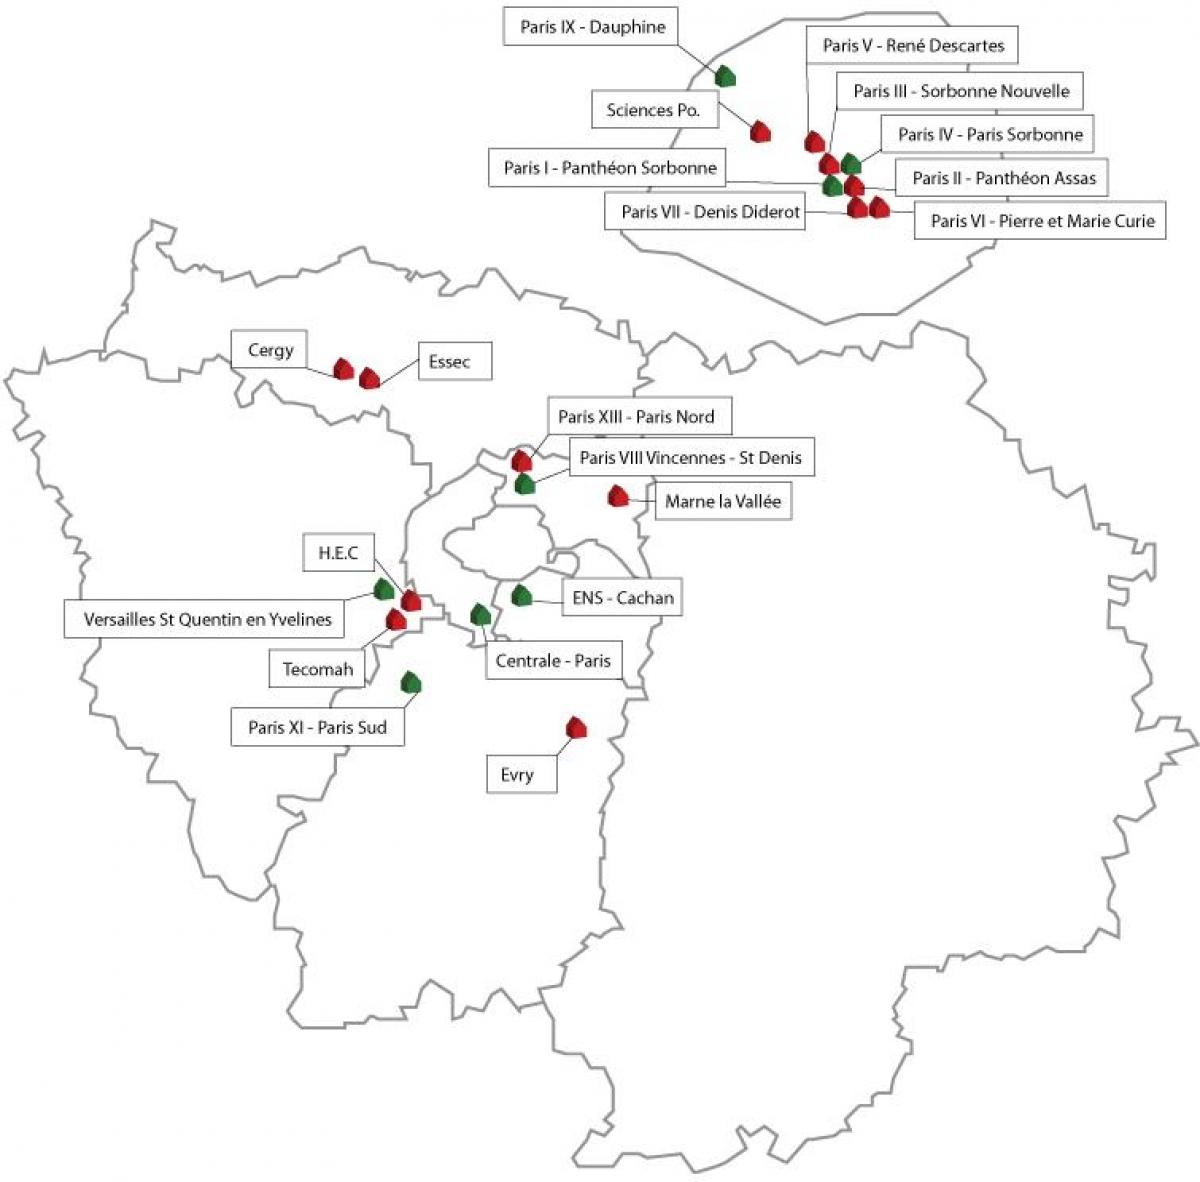 Kart over Paris universiteter